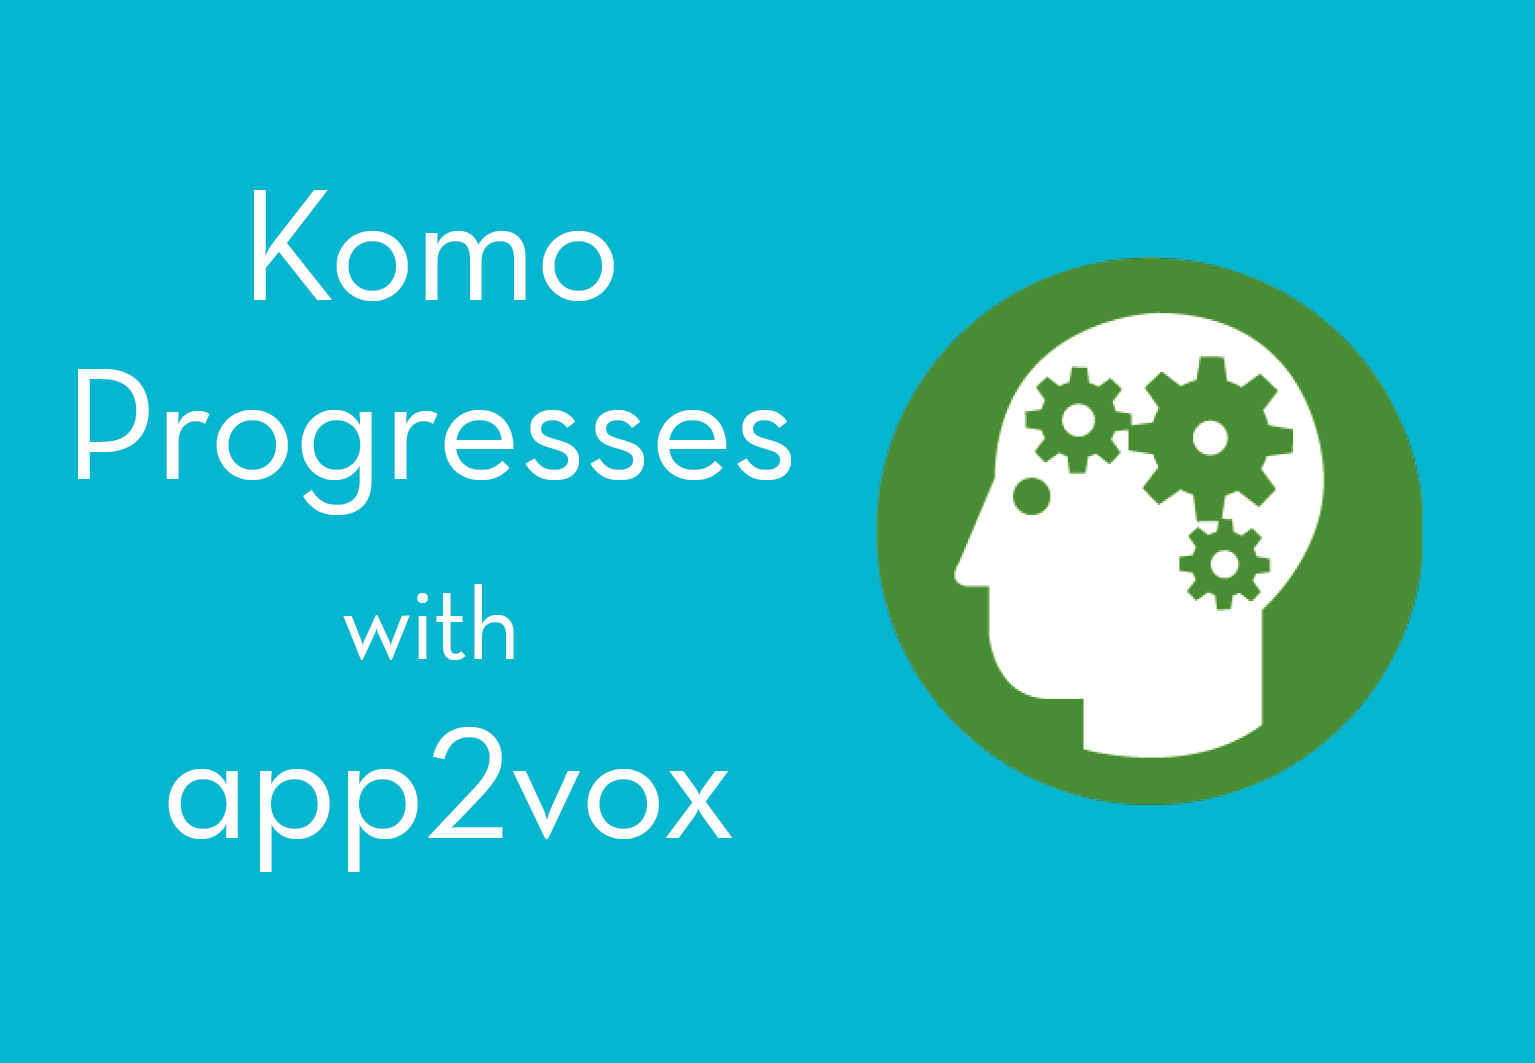 Komo Progresses with app2vox